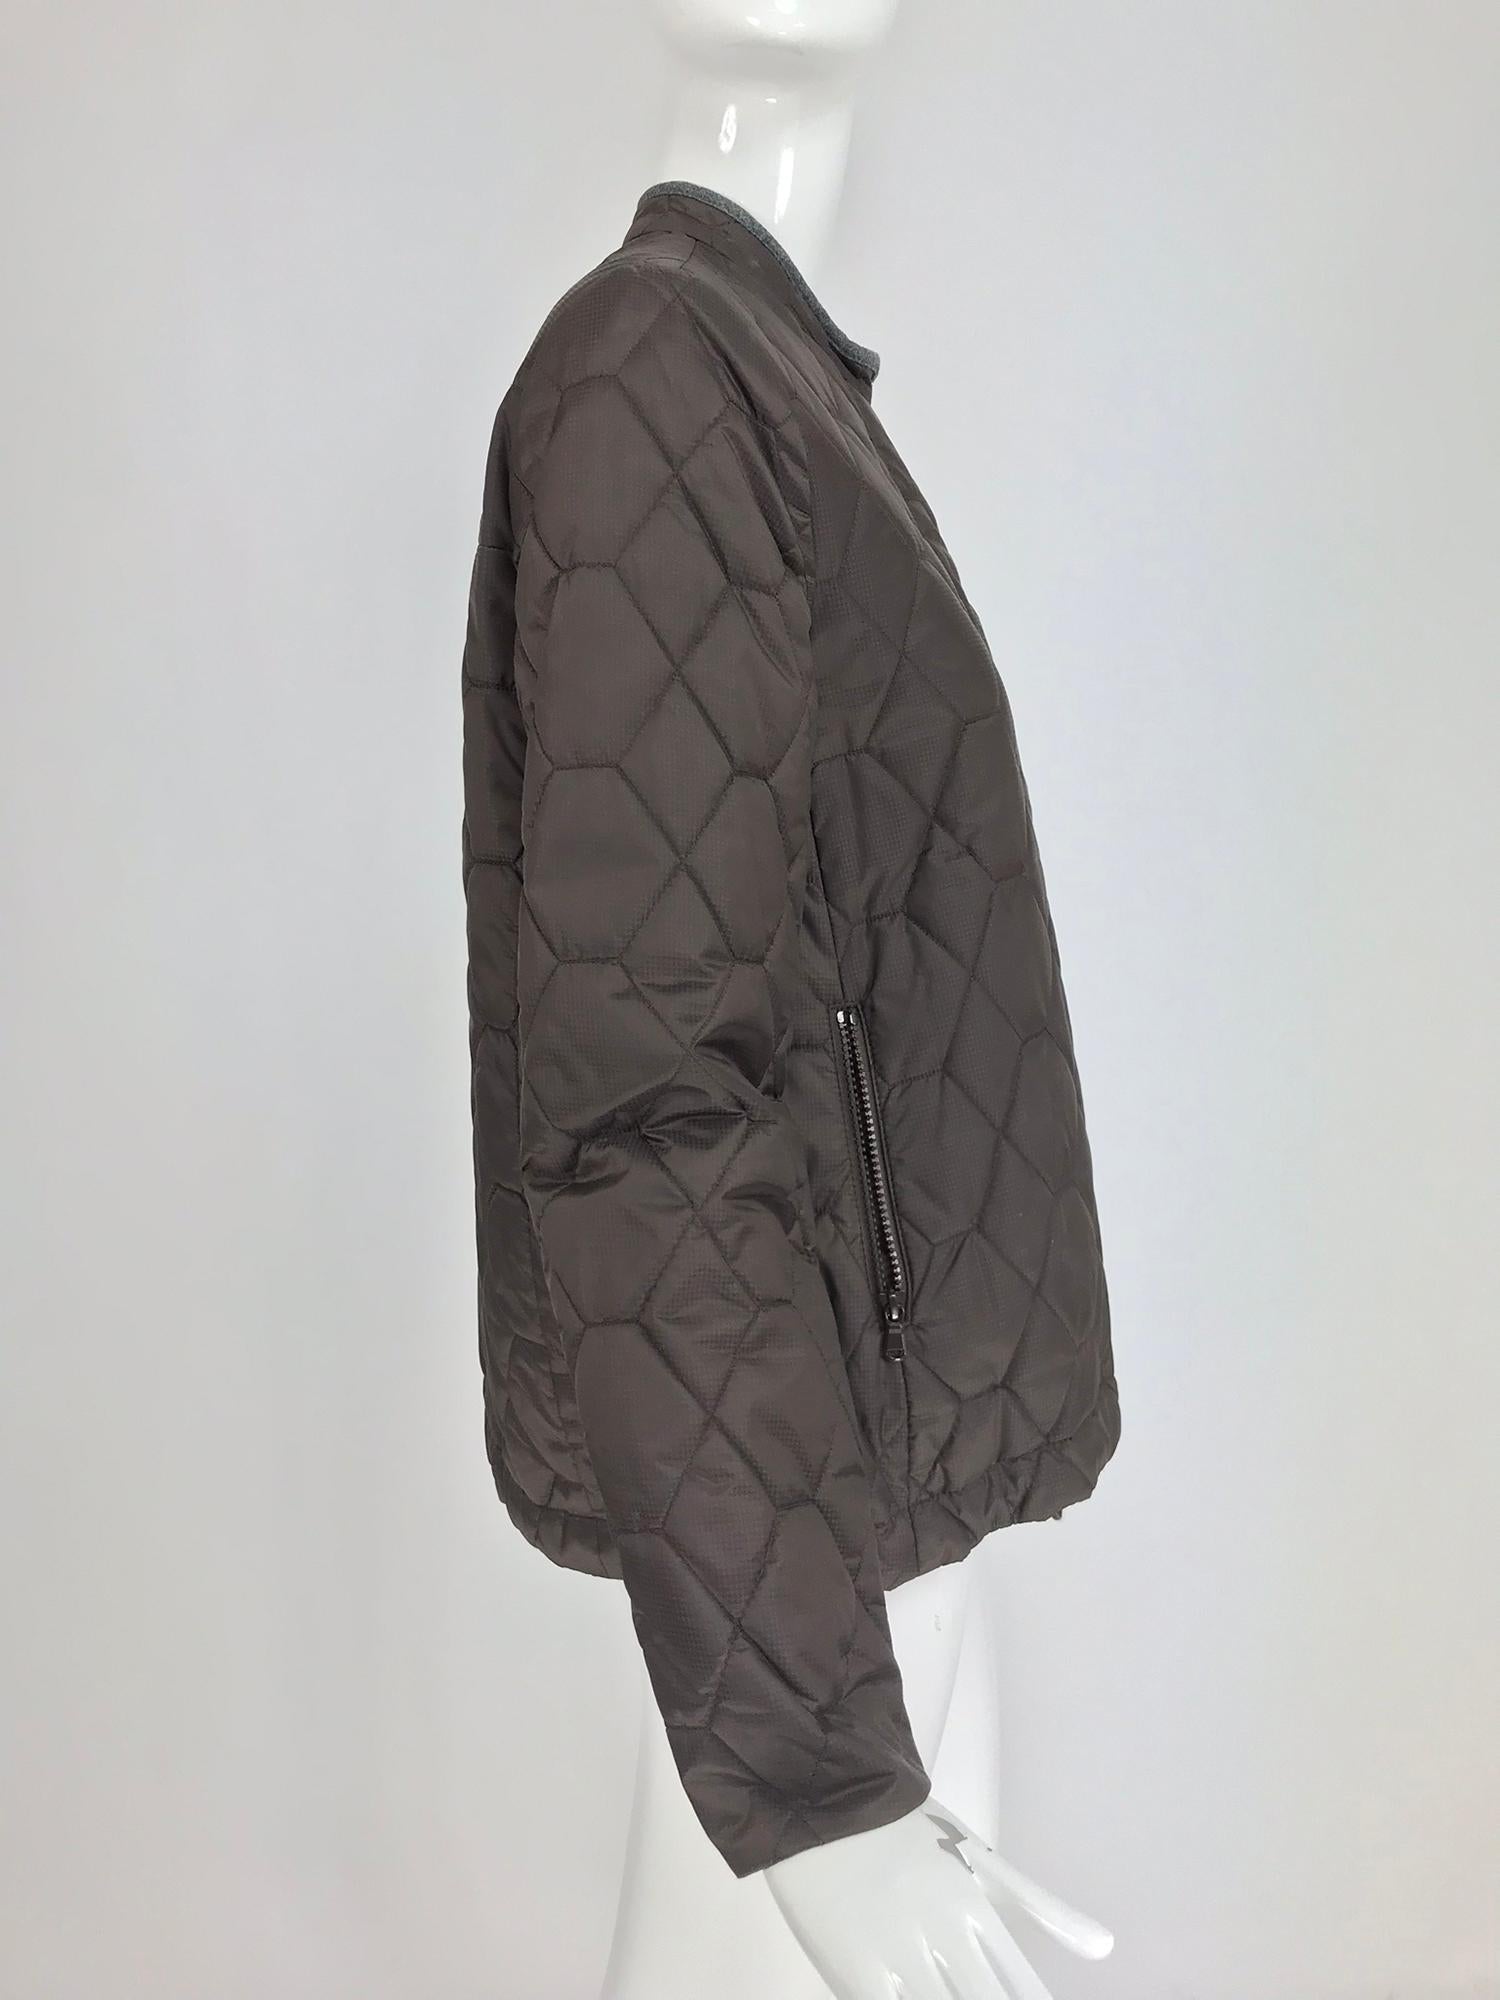 Brunello Cucinelli Chocolate Brown geometric pattern Quilted Sport Jacket 42 5